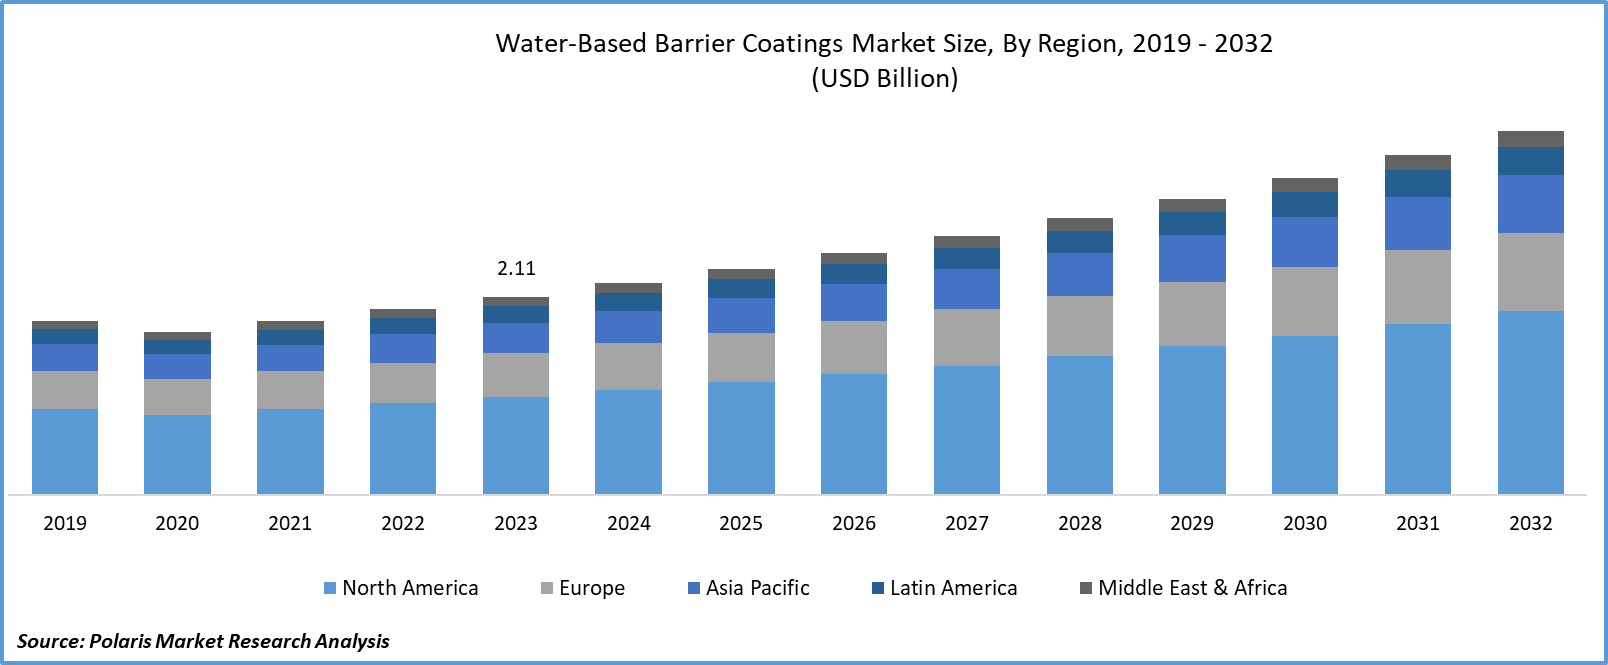 Water-Based Barrier Coatings Market Size